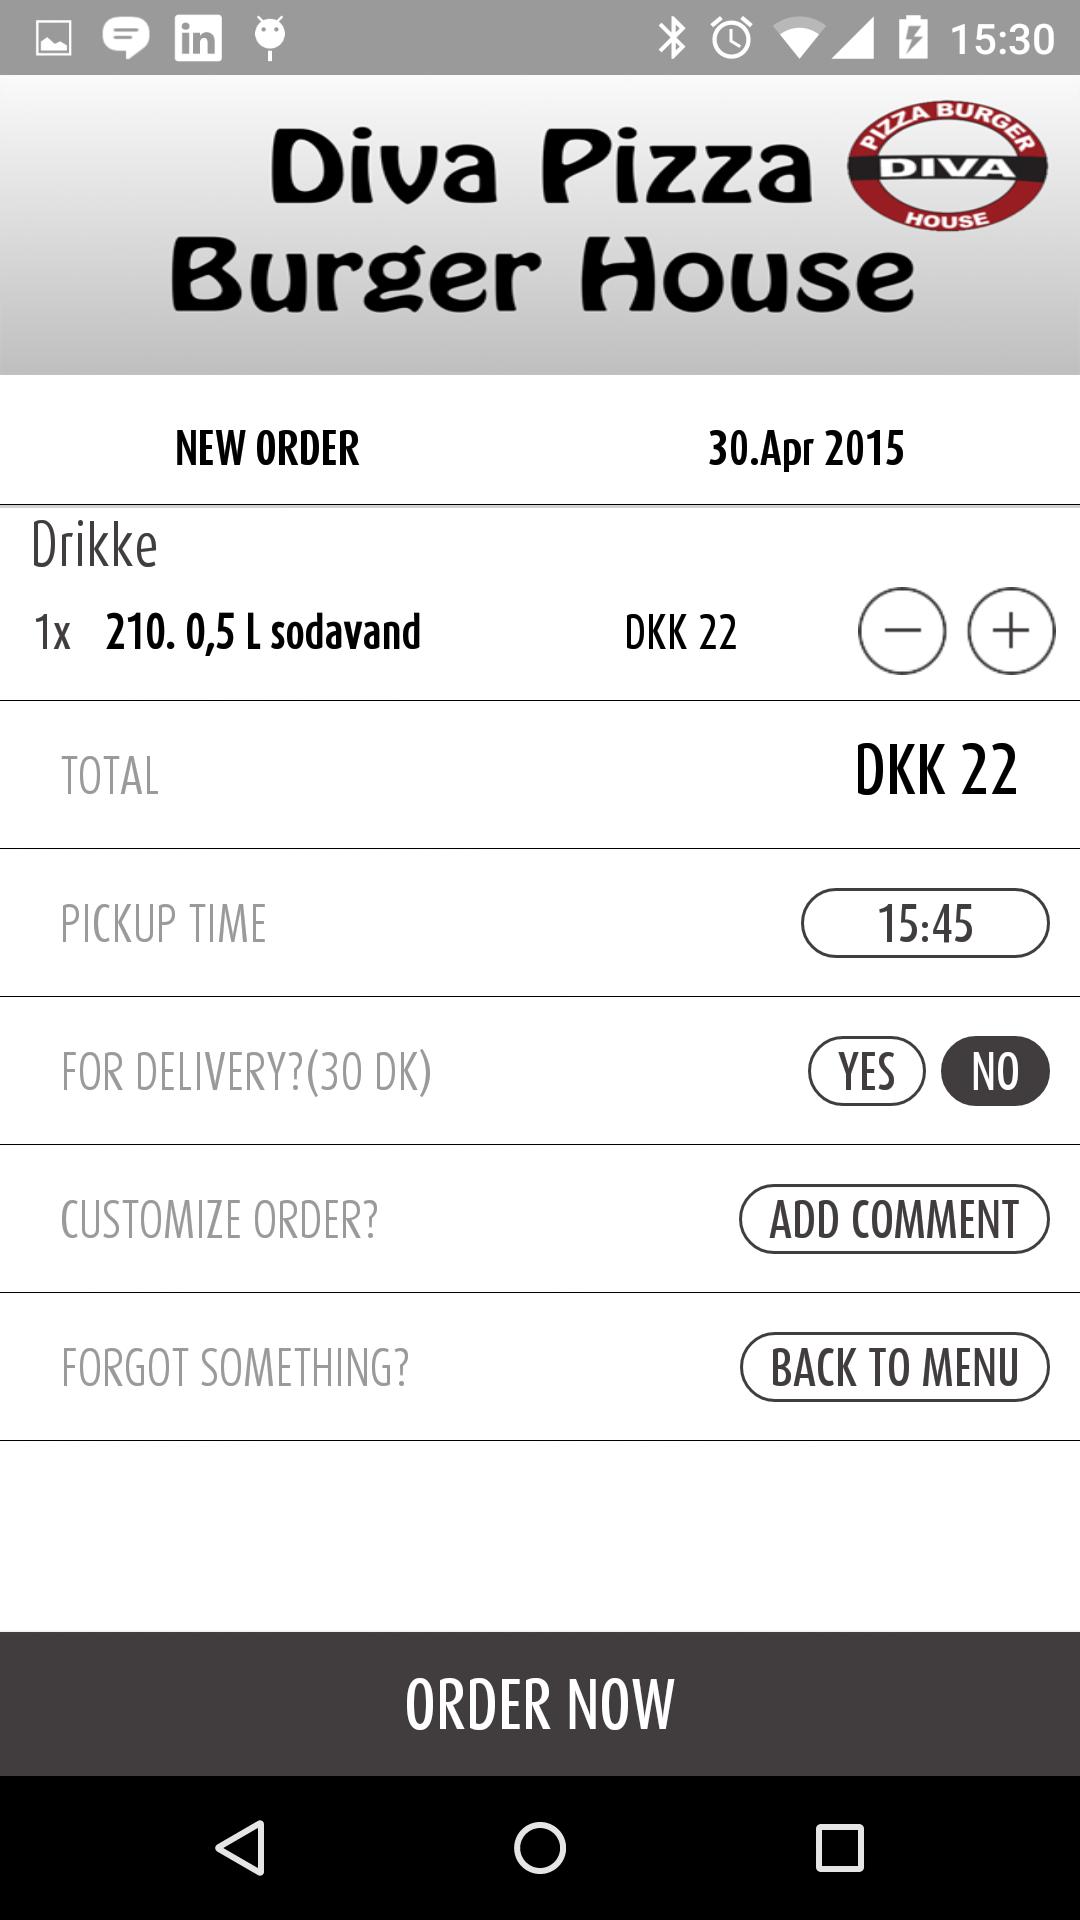 Diva Pizza & Burger House -Frb para Android - APK Baixar